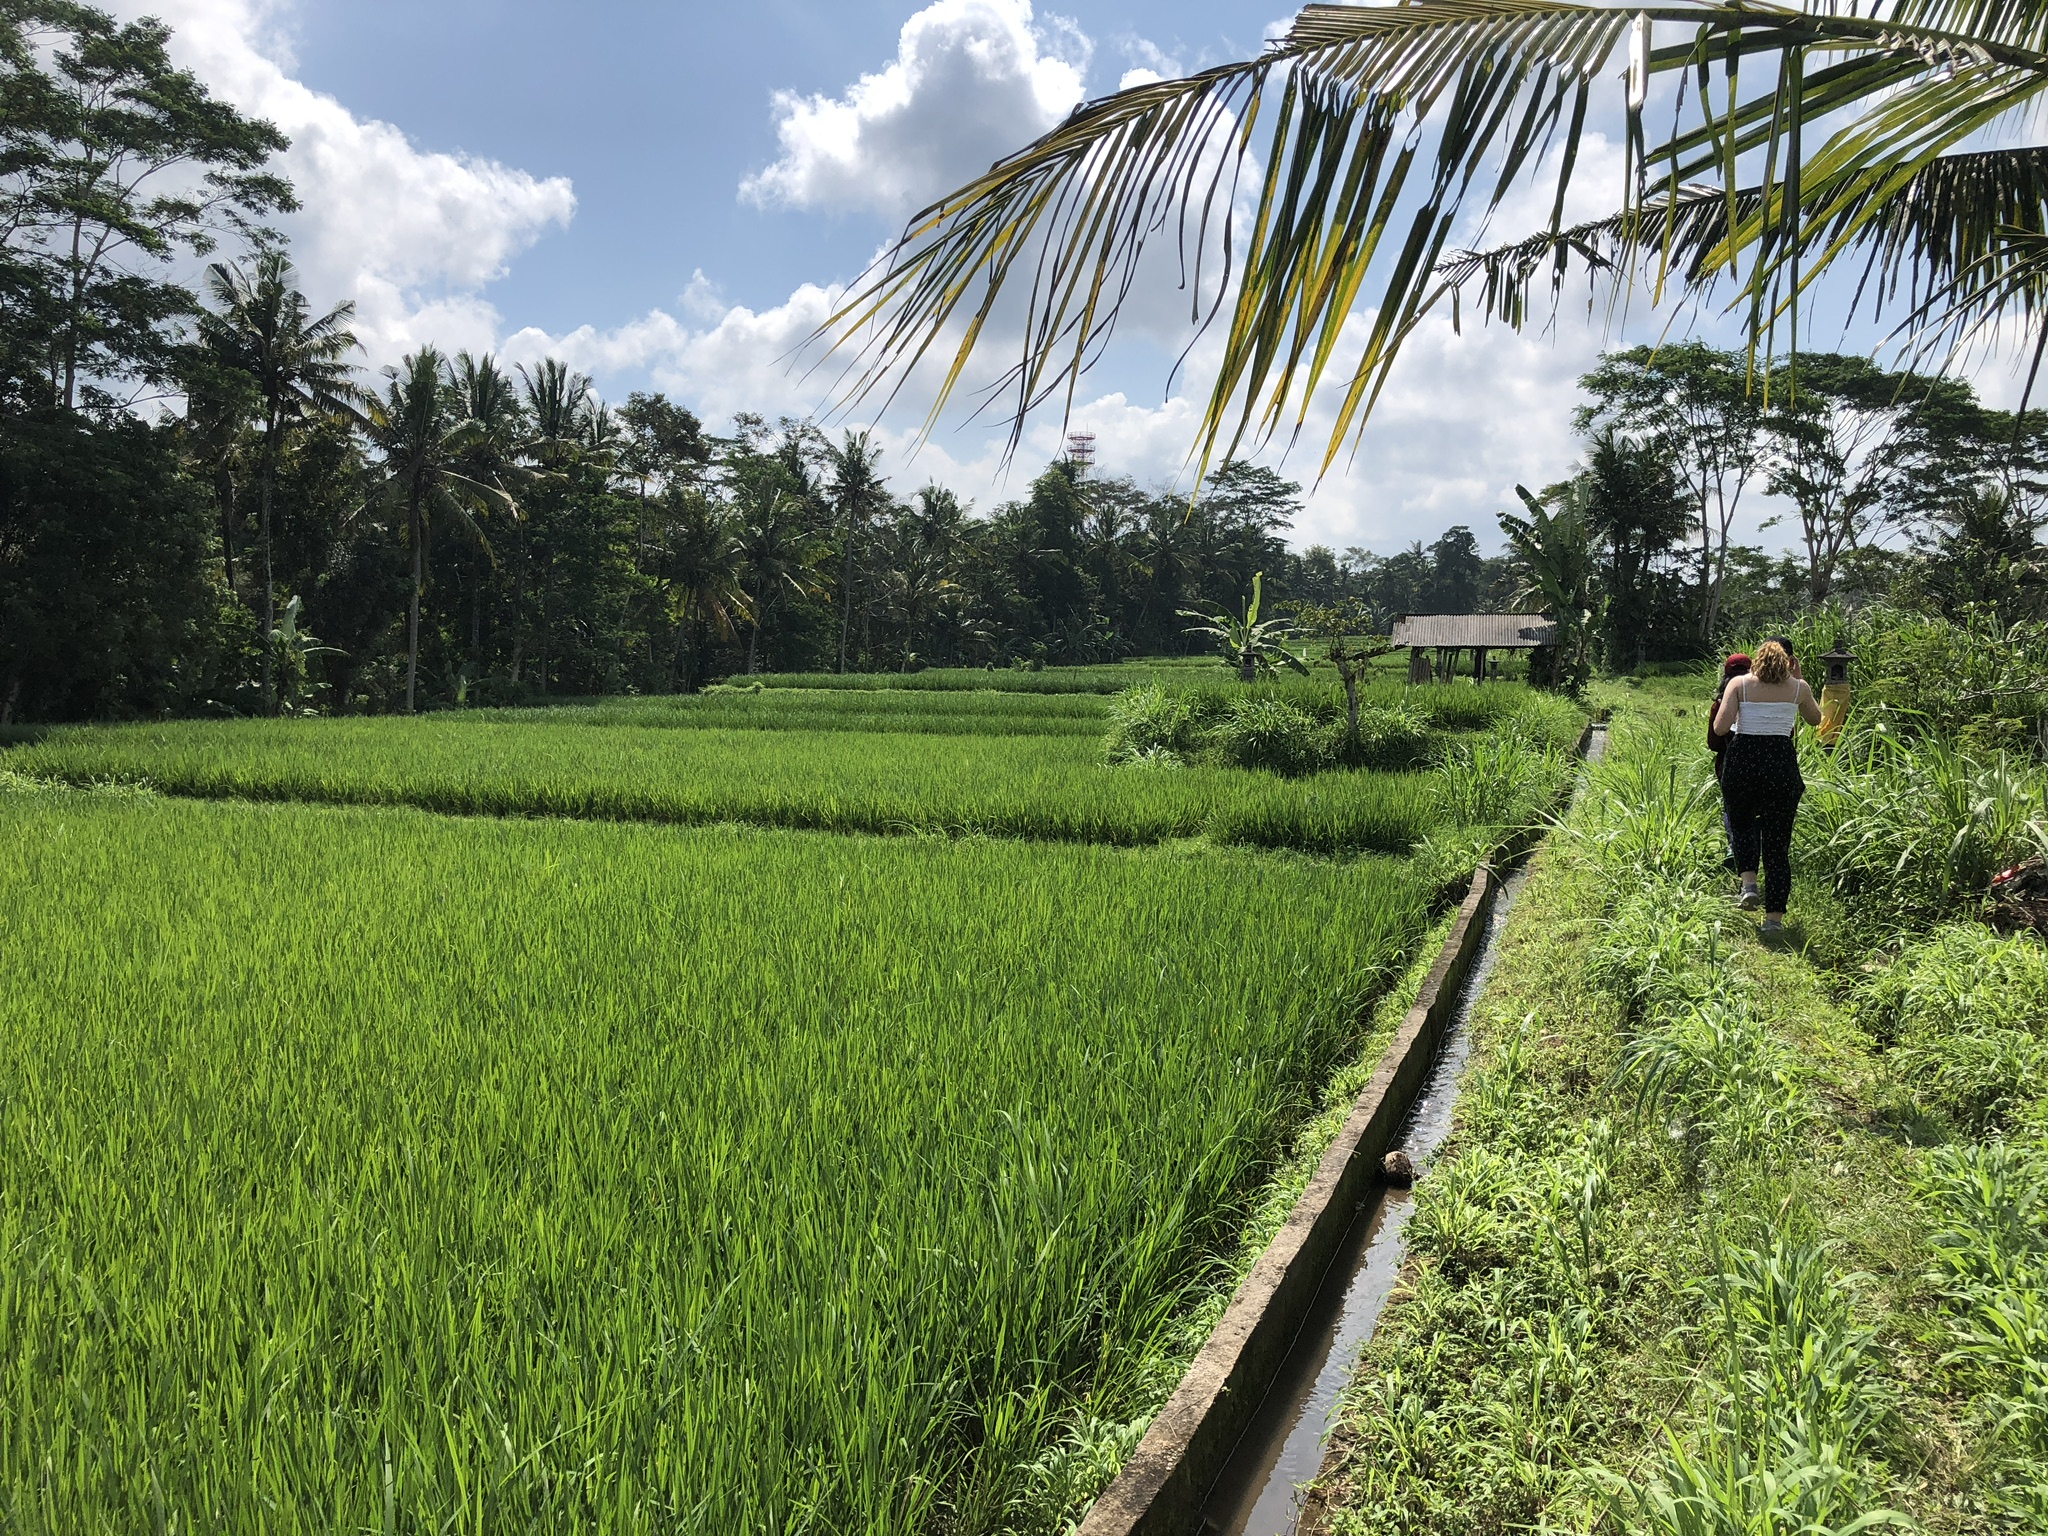 Bali rice fields